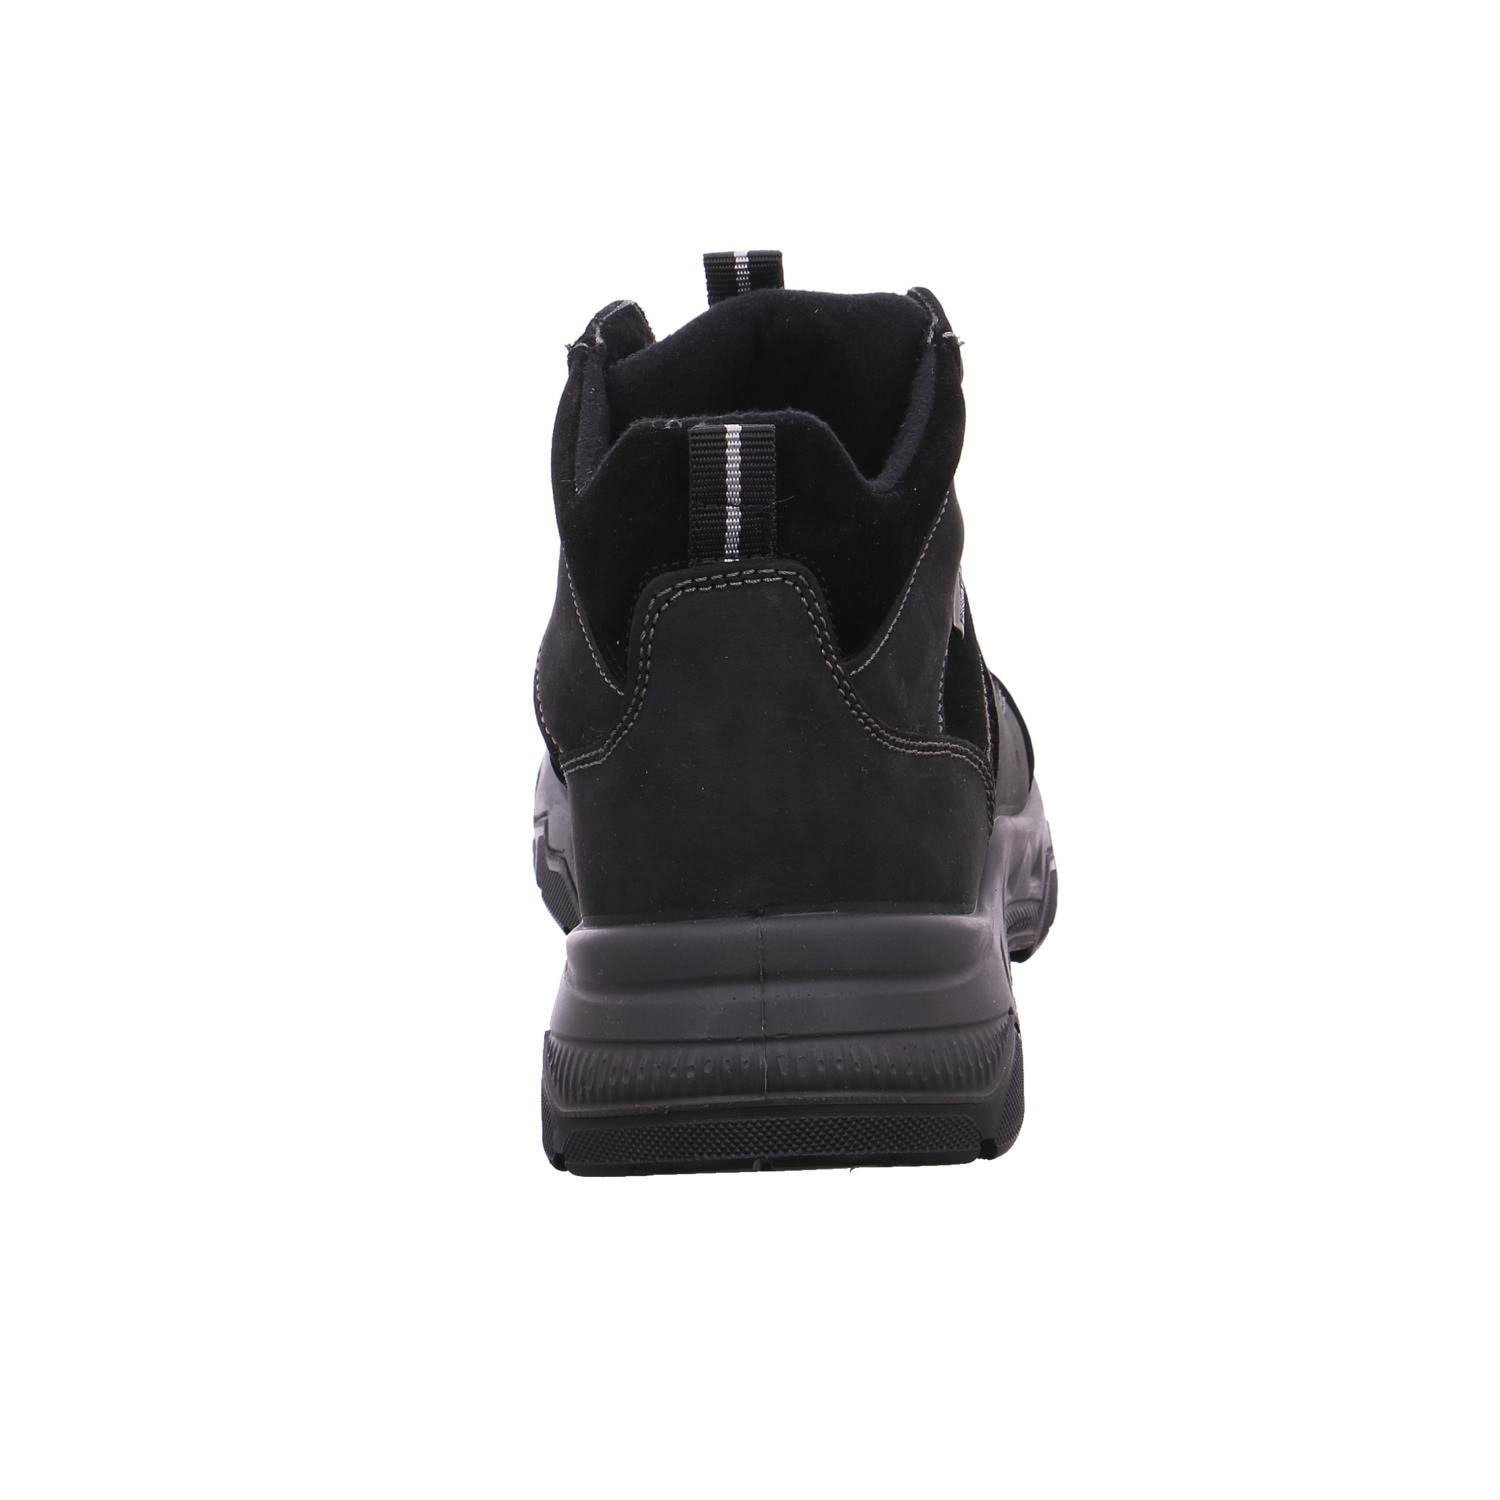 IMAC Winter-Boots Schwarz Leder FN6227